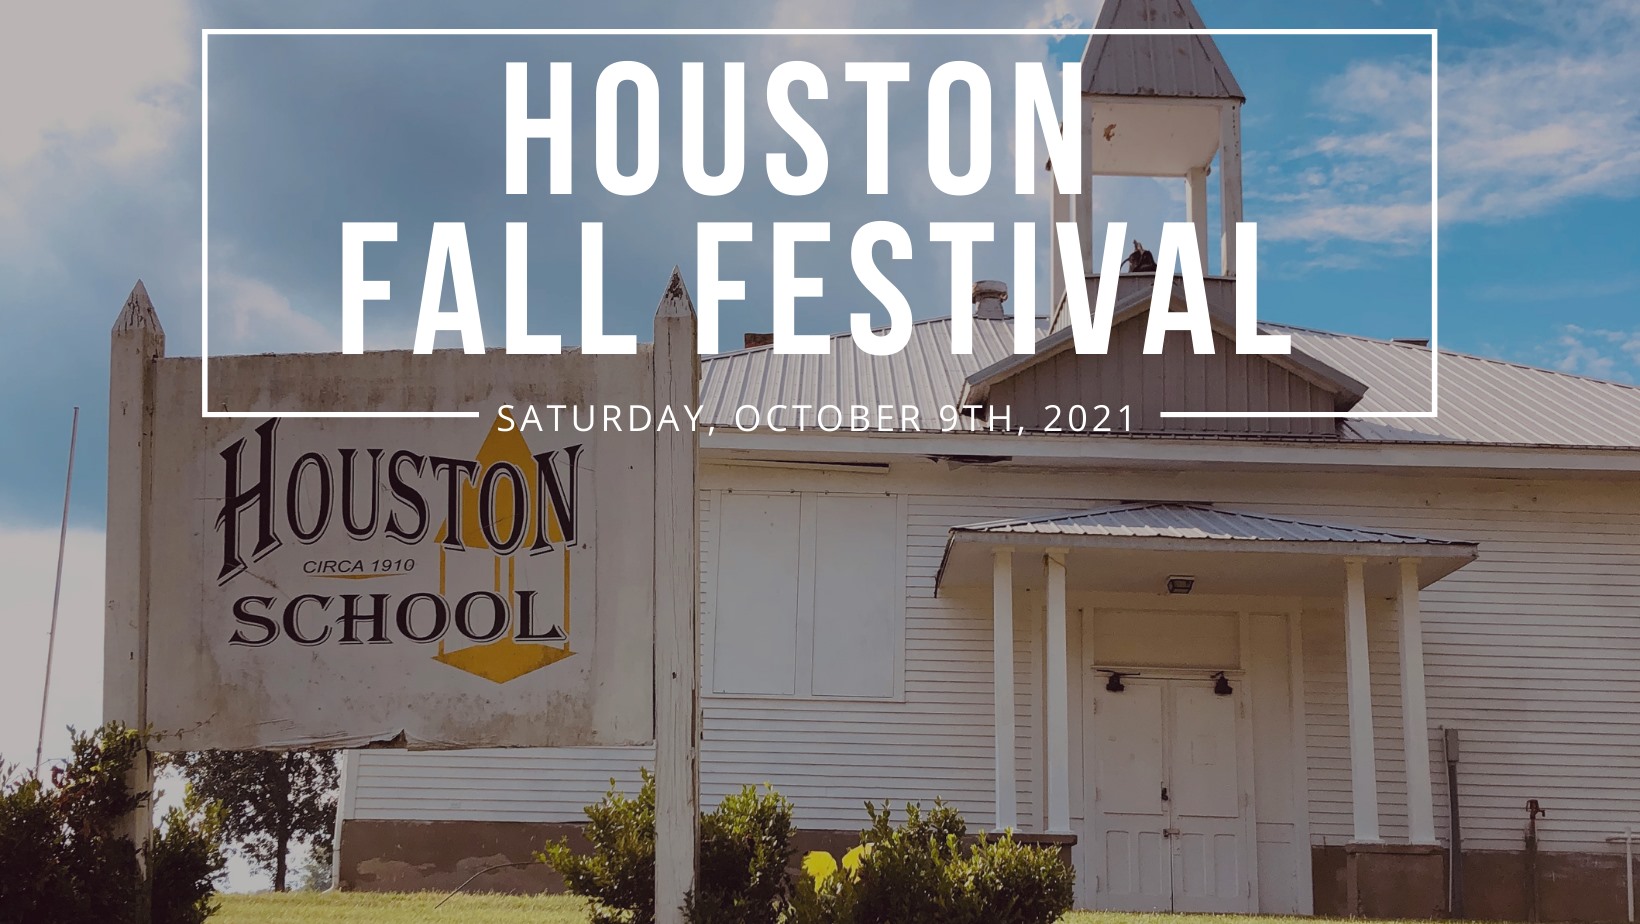 Vendor applications available for Houston Fall Festival Family Travel